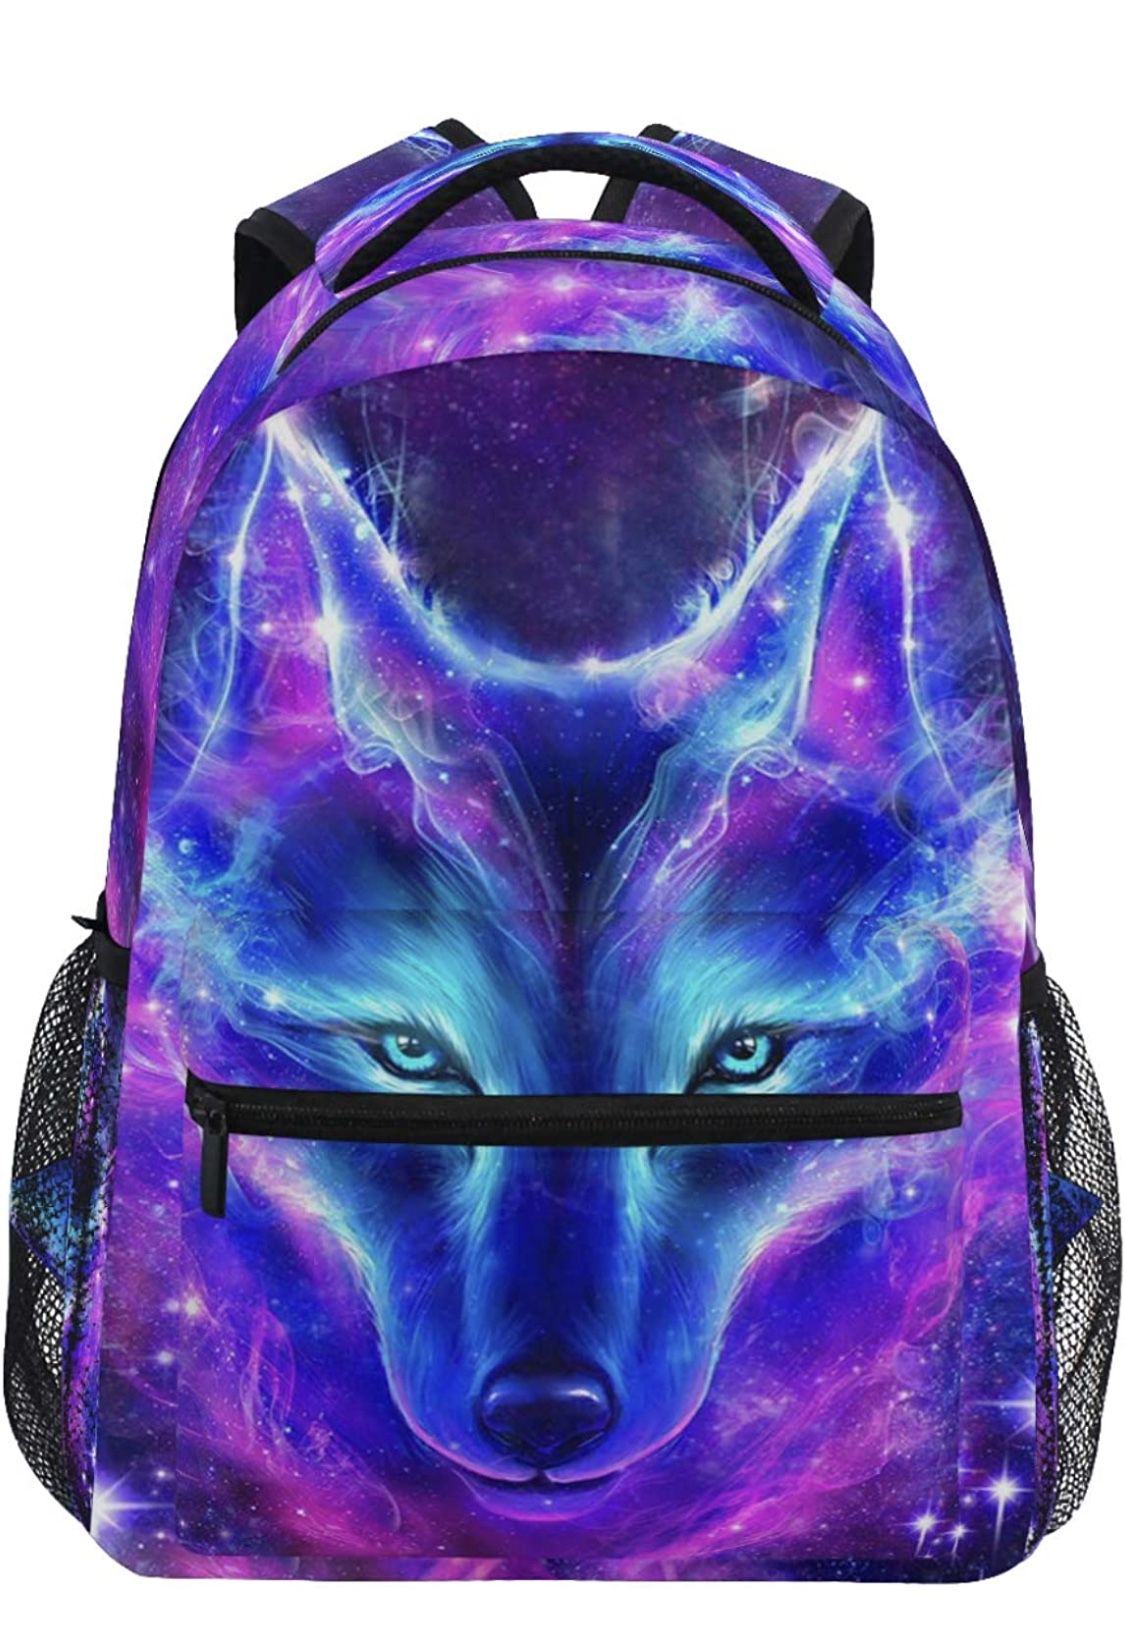 Oarencol Wolf Galaxy Star Backpack Animal Night Sky Bookbag Daypack Travel Hiking Camping School Laptop Bag